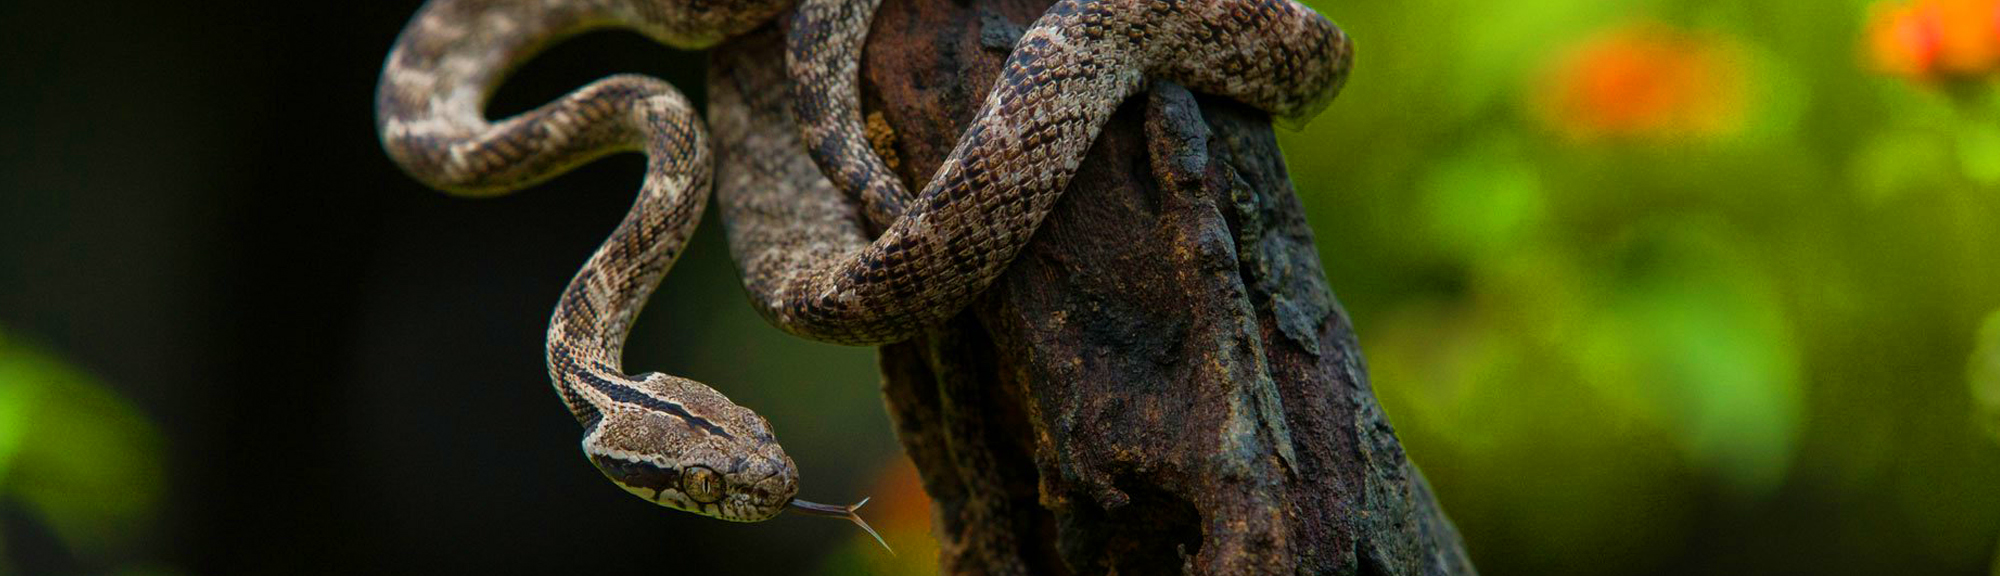 Snake Farm TRIP In Sri Lanka | pradeeptours.com